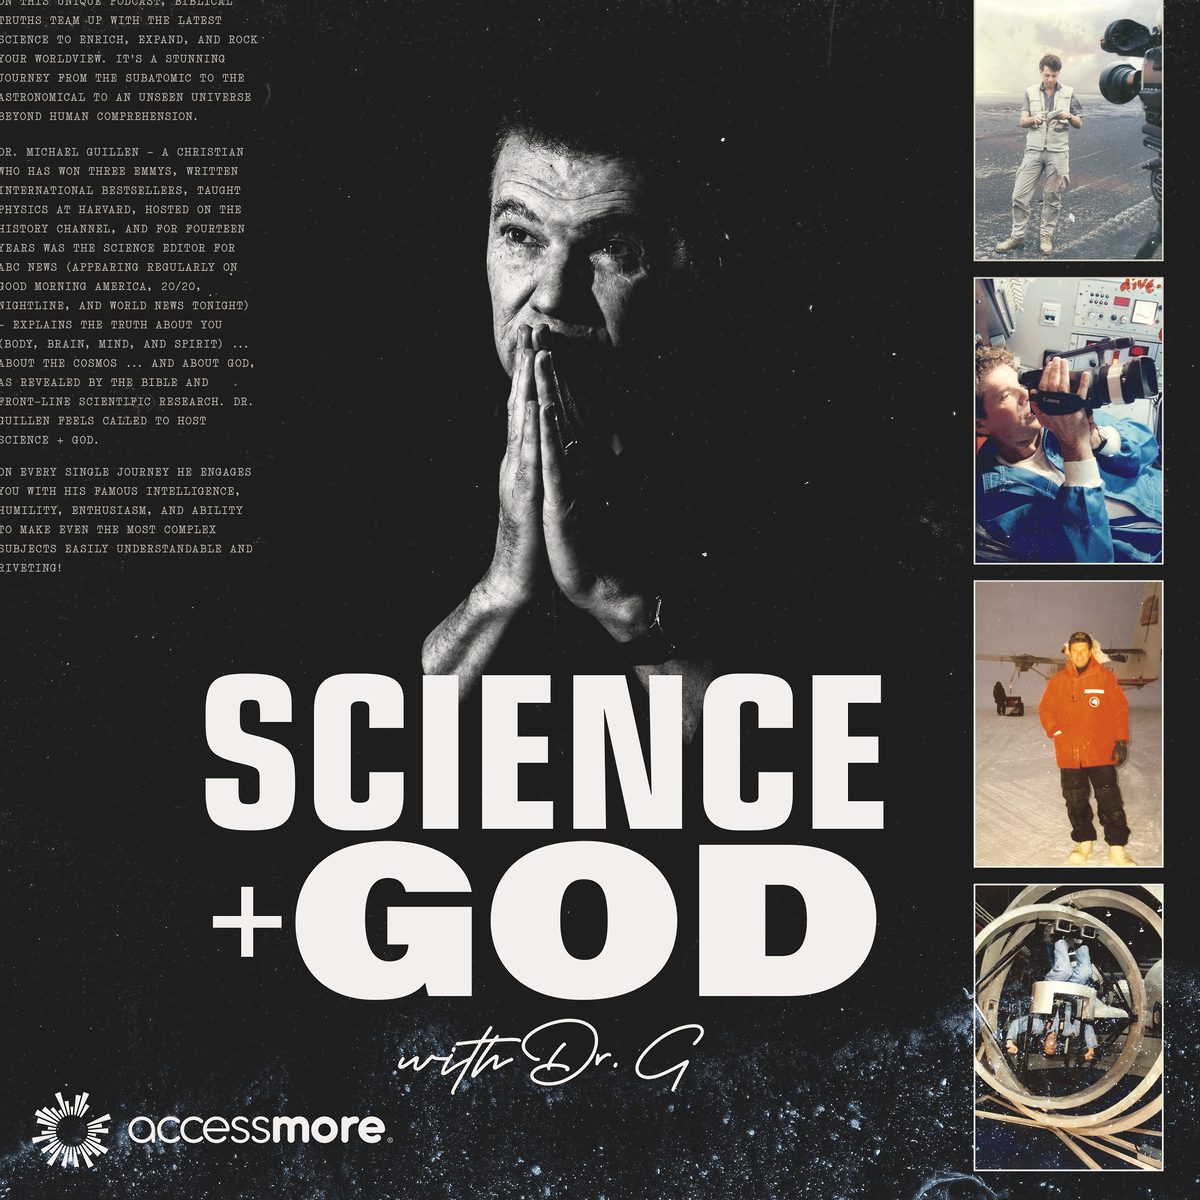 Journey #68 - Cancel Culture Is Anti-Scientific & Un-Christian